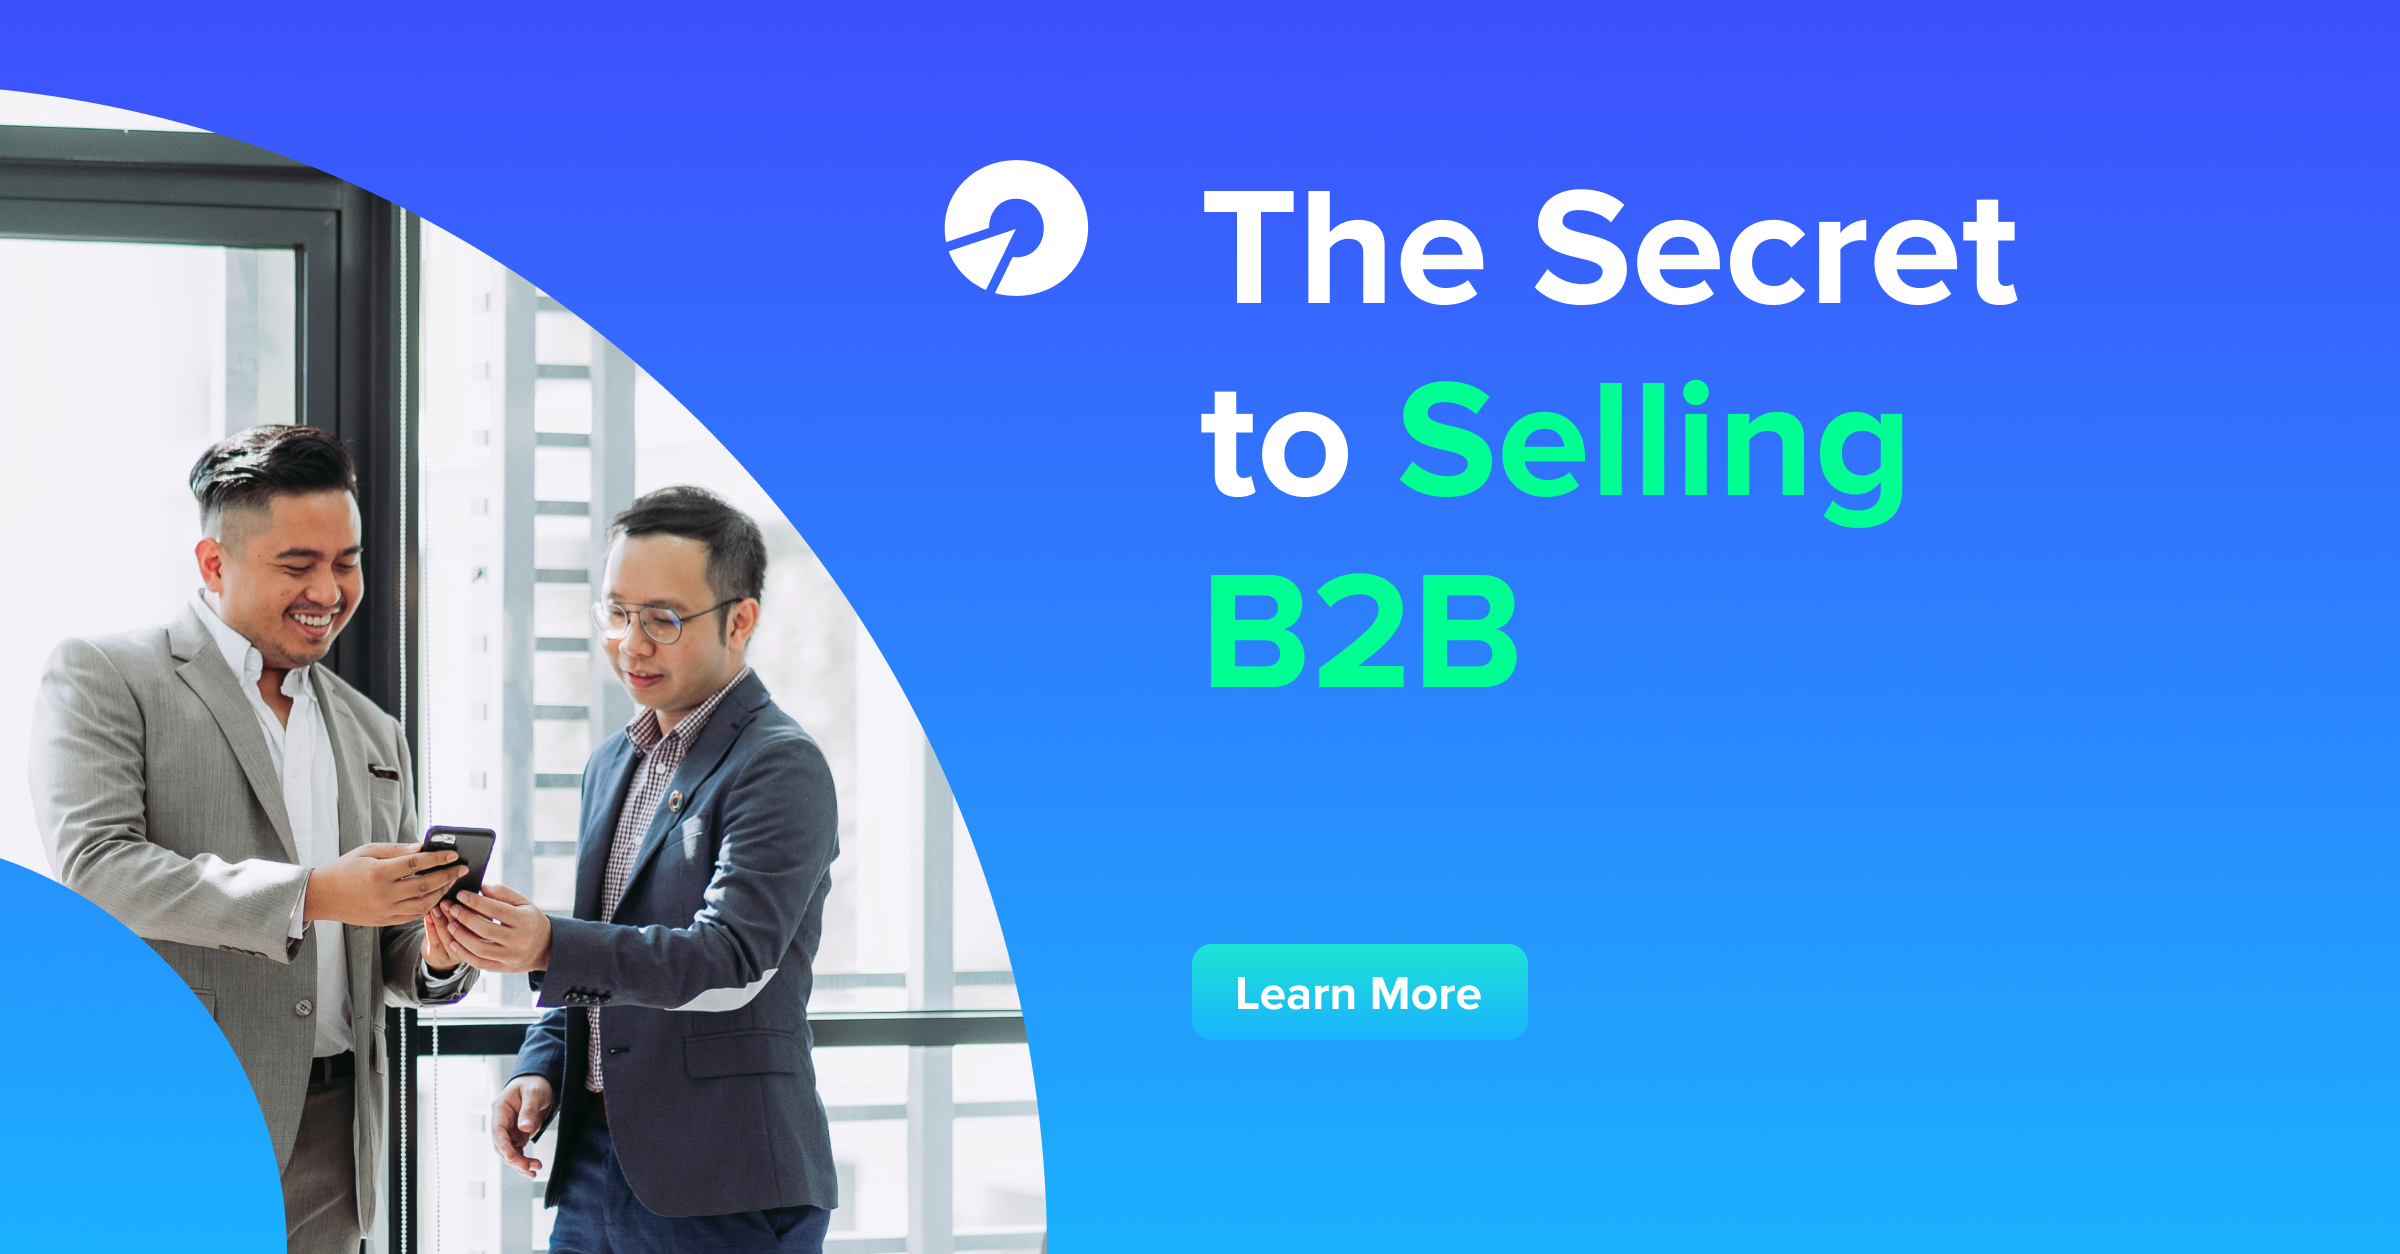 The Secret to Selling B2B